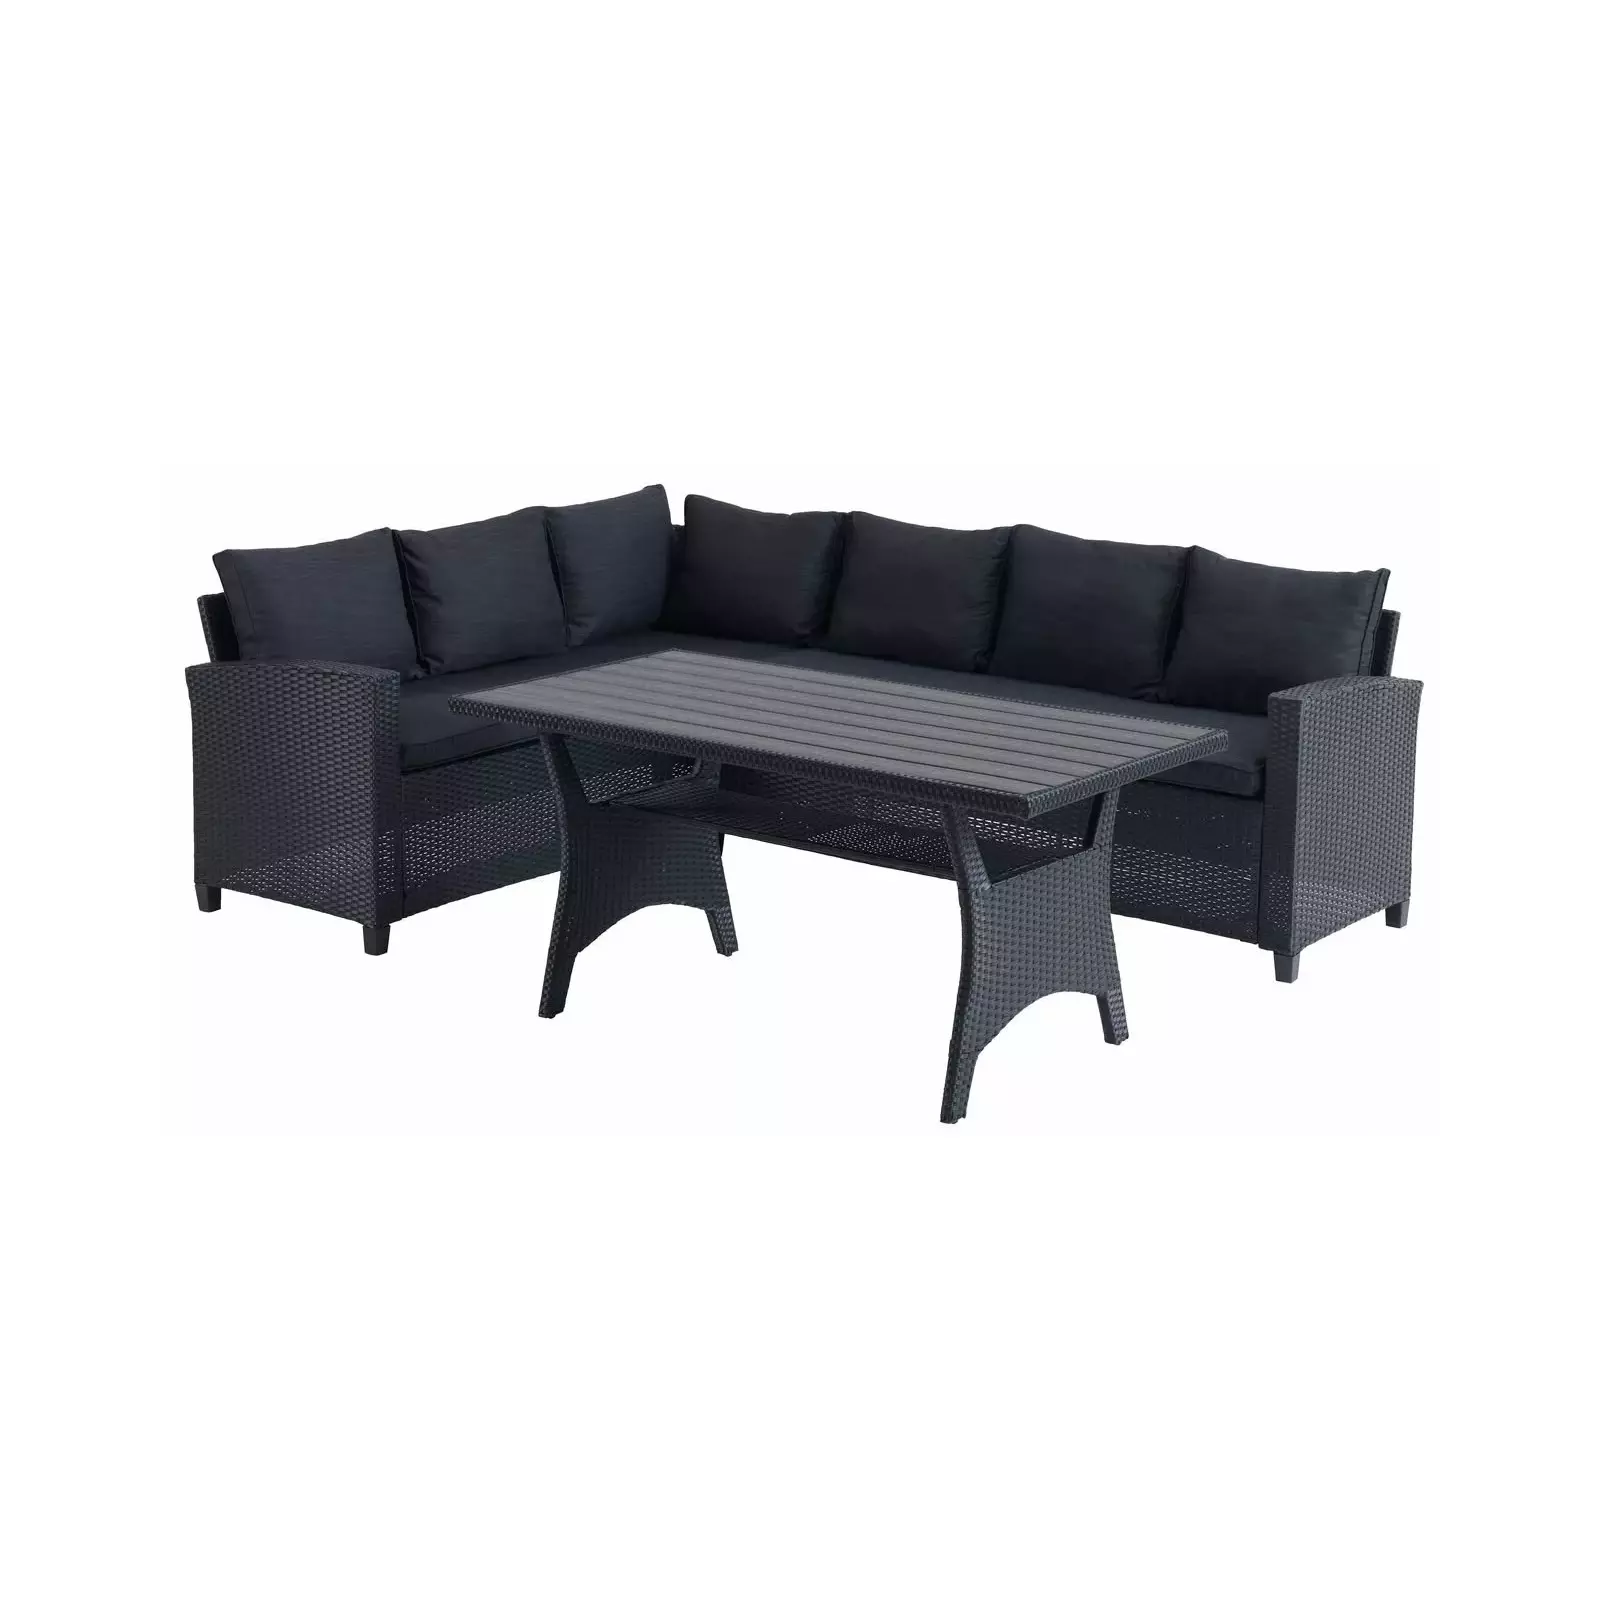 Modtager Let tempereret Jysk outdoor furniture set (sofa 3700012 | Hammocks & hanging chairs |  AiO.lv